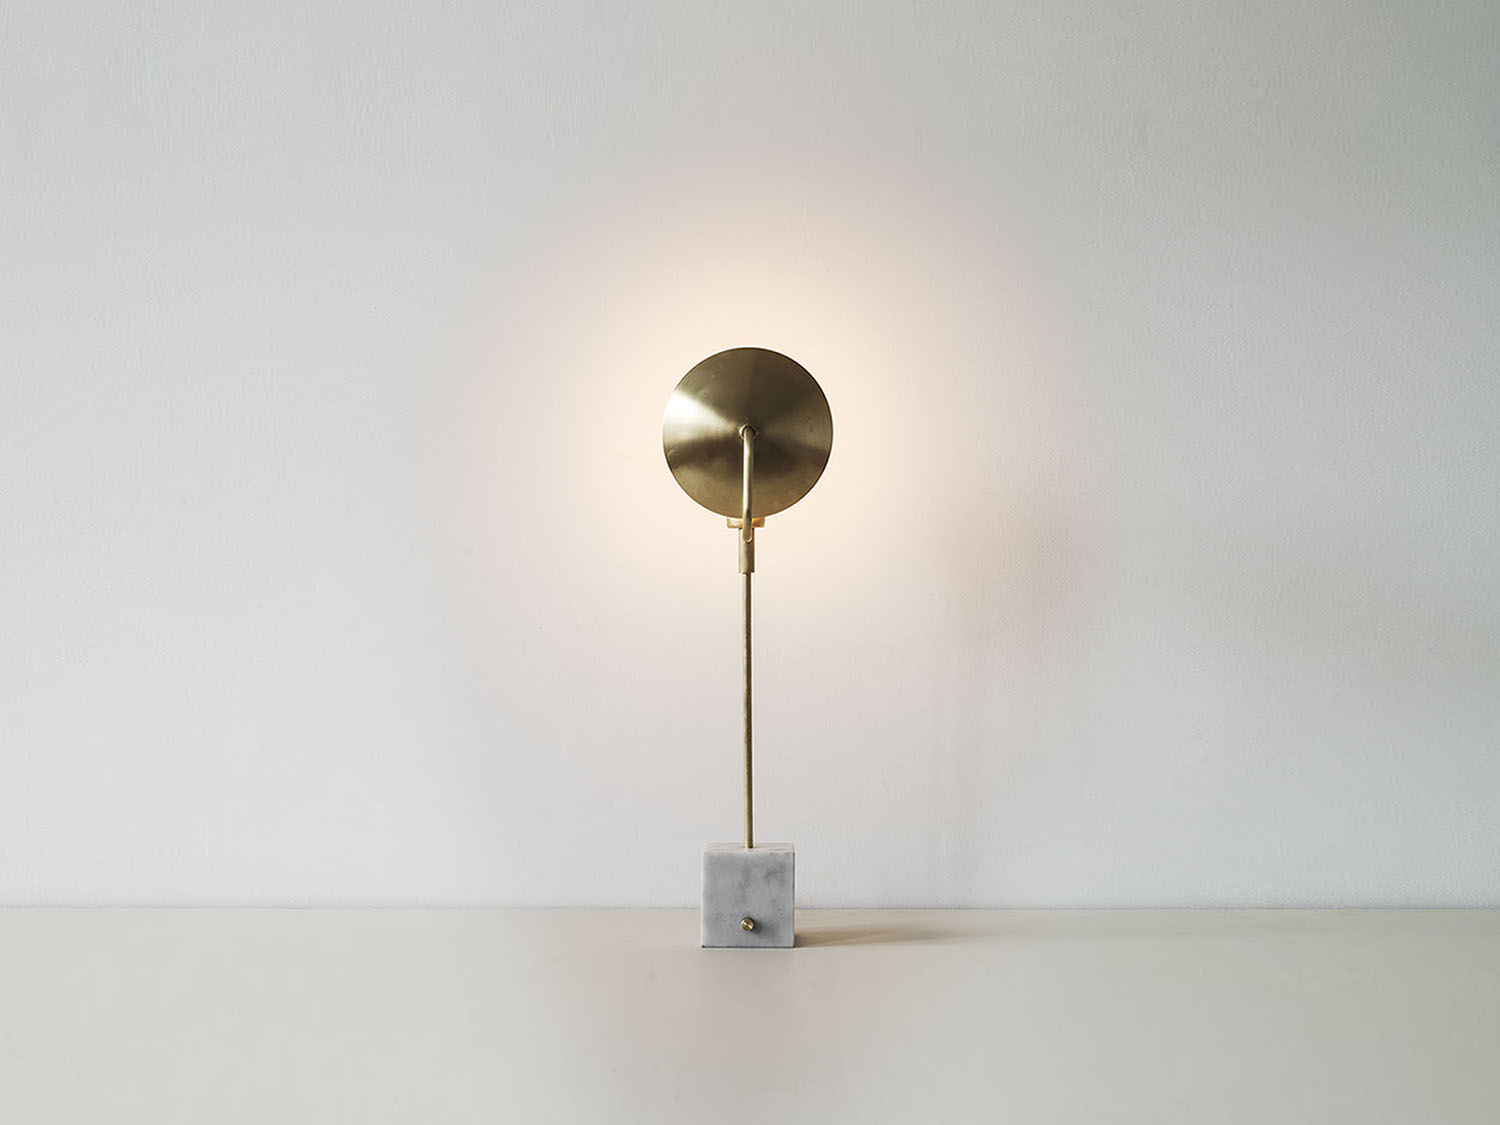 Orbit Table Lamp by Workstead